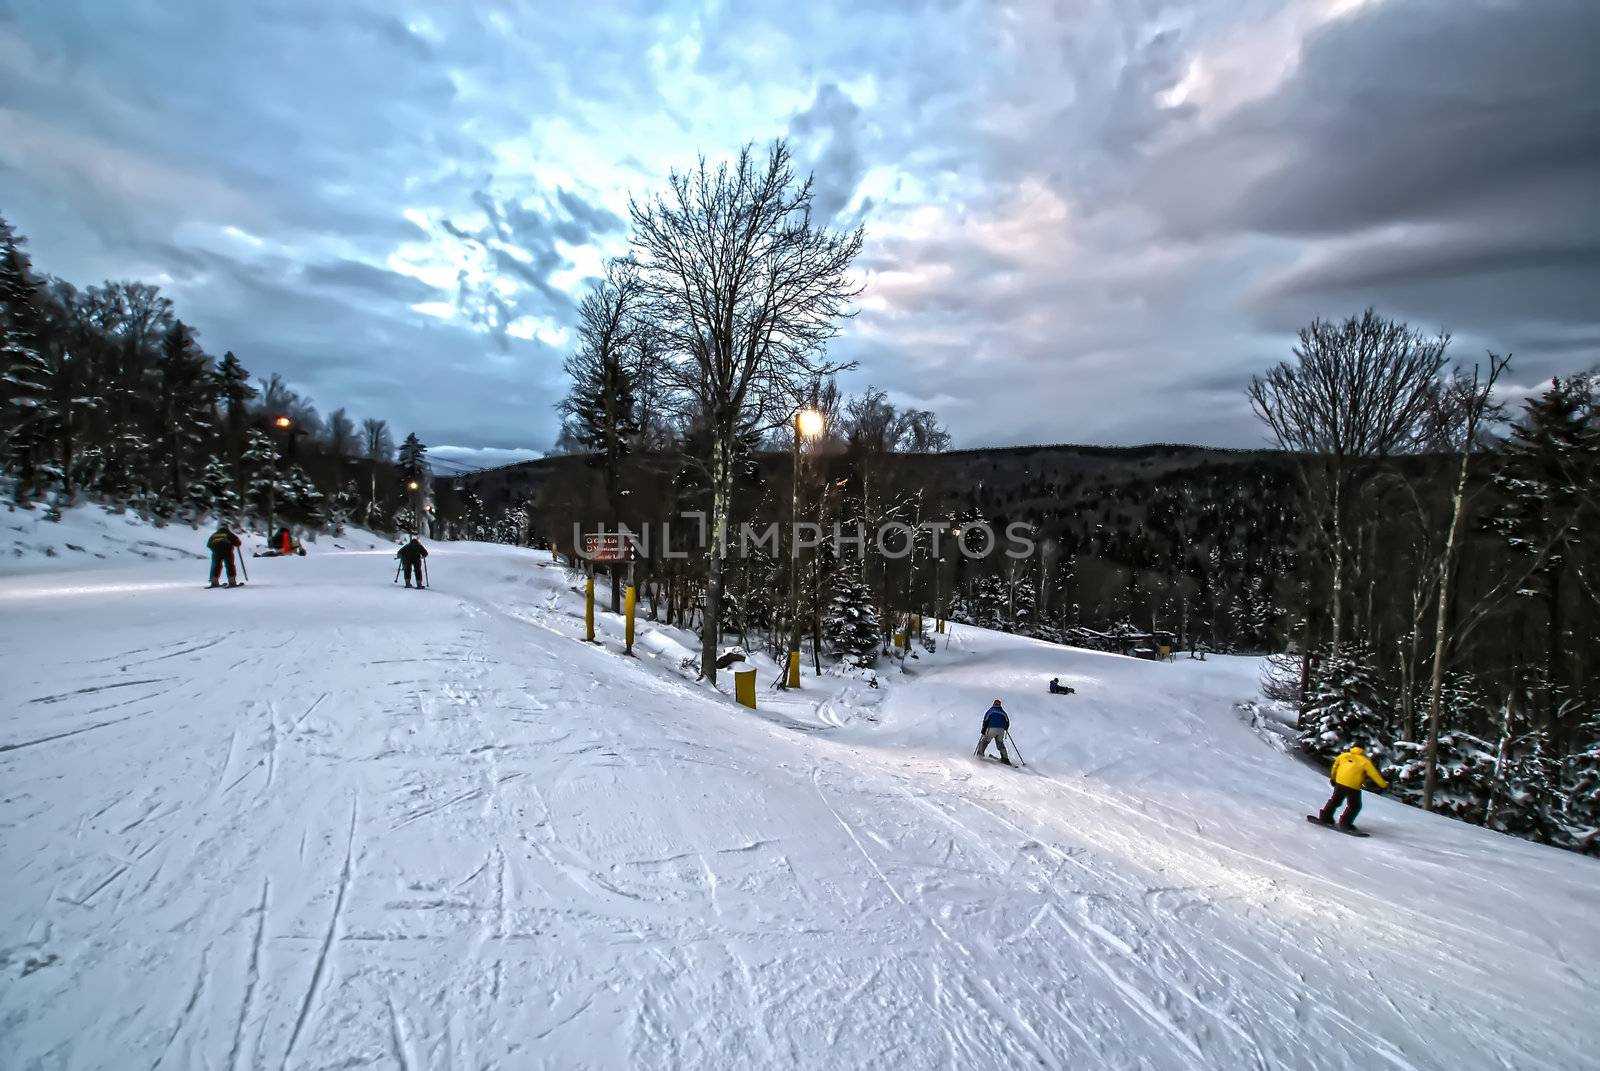 skiing downhill by digidreamgrafix